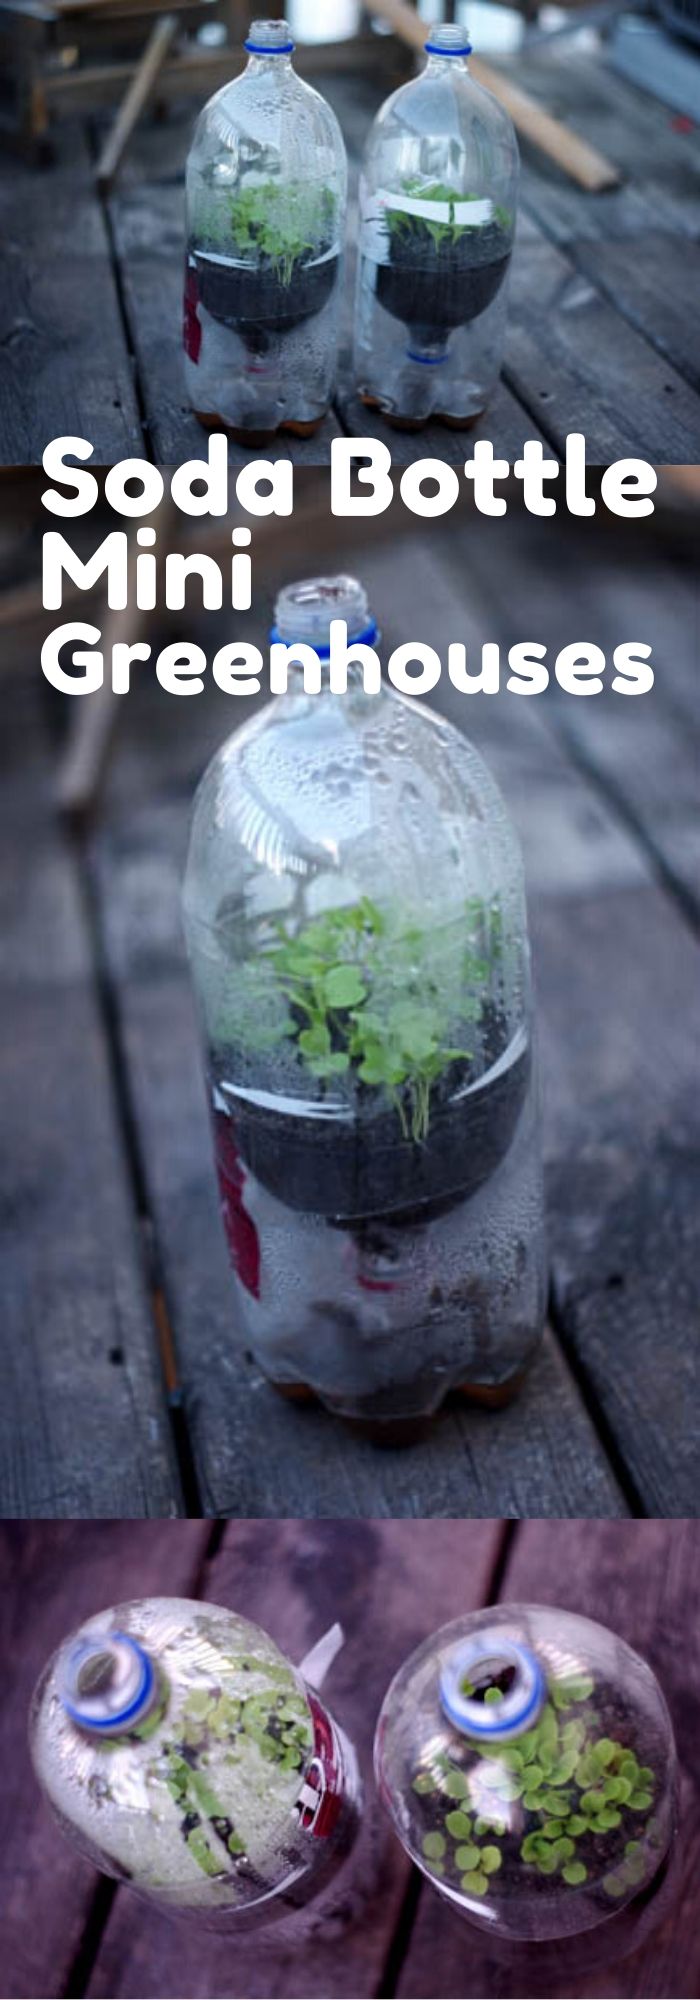 Soda Bottle Mini Greenhouses | Gardening Hacks and Trips